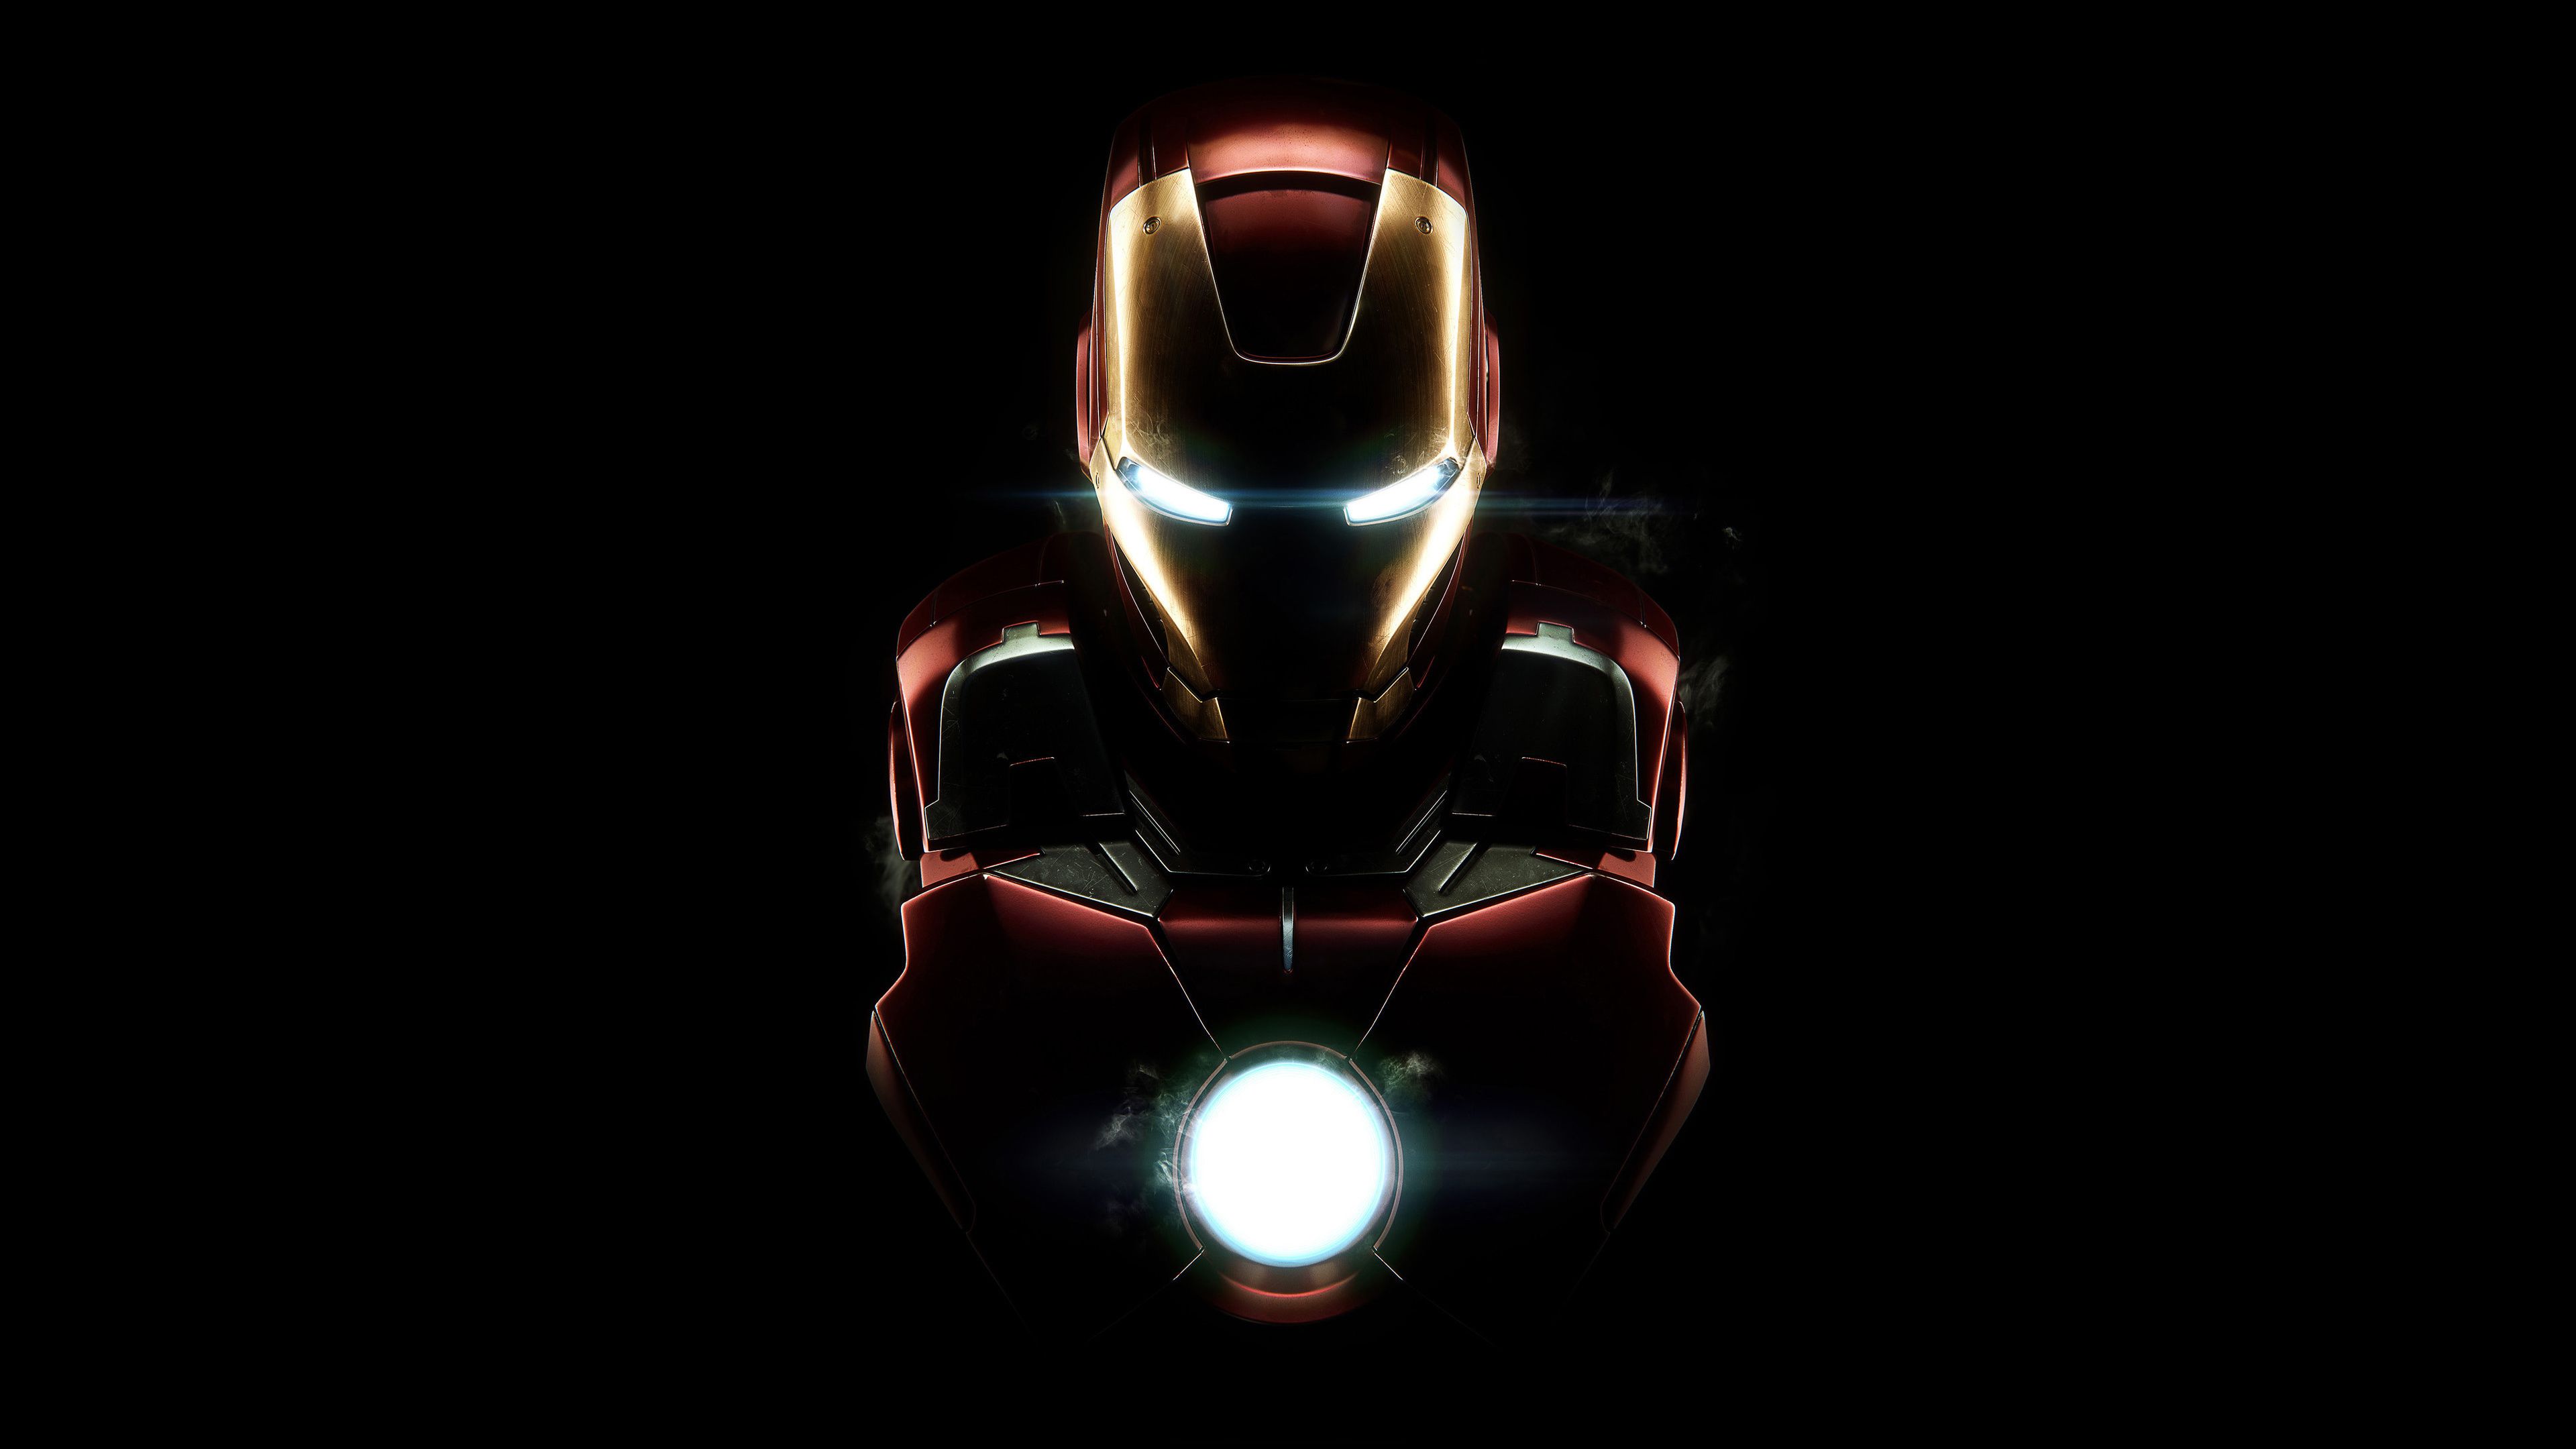 Free download Download 3840x2160 wallpaper iron man dark armor mark vii 4k [3840x2160] for your Desktop, Mobile & Tablet. Explore Iron Man 4K Wallpaperk Iron Man Wallpaper, Iron